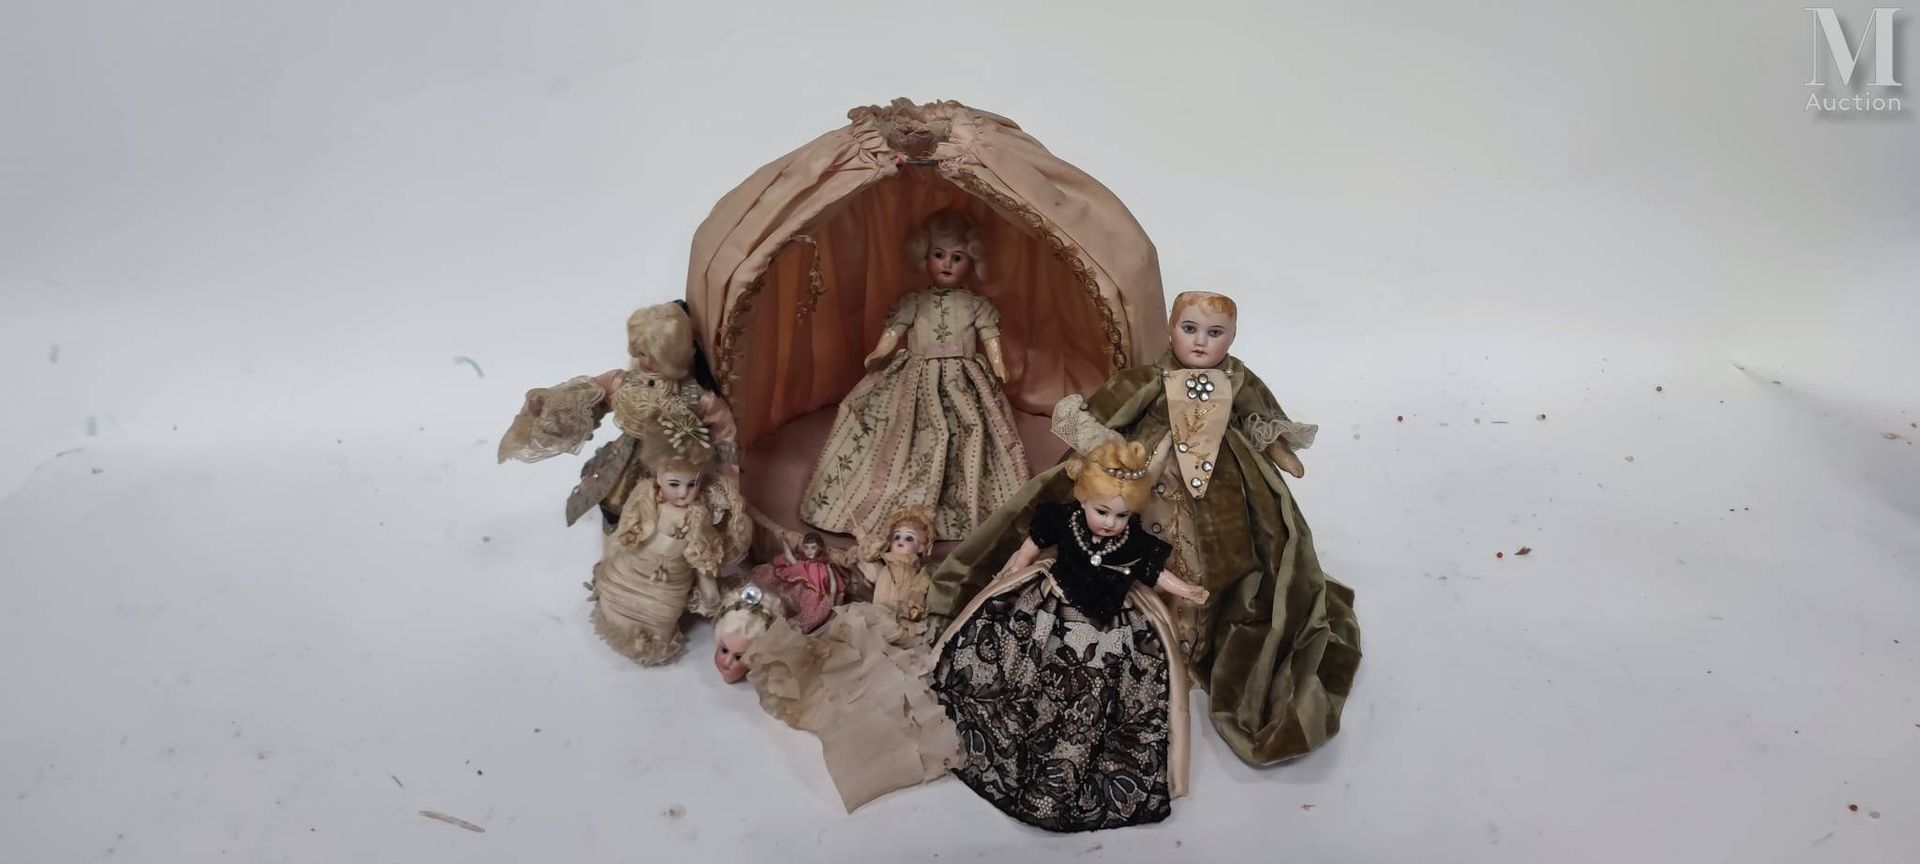 Lot de six poupées Mignonettes 头部为饼干色，手臂和身体为构图色。一个人打扮成新娘，其他人都是18世纪的风格。高：11至24厘米
&hellip;